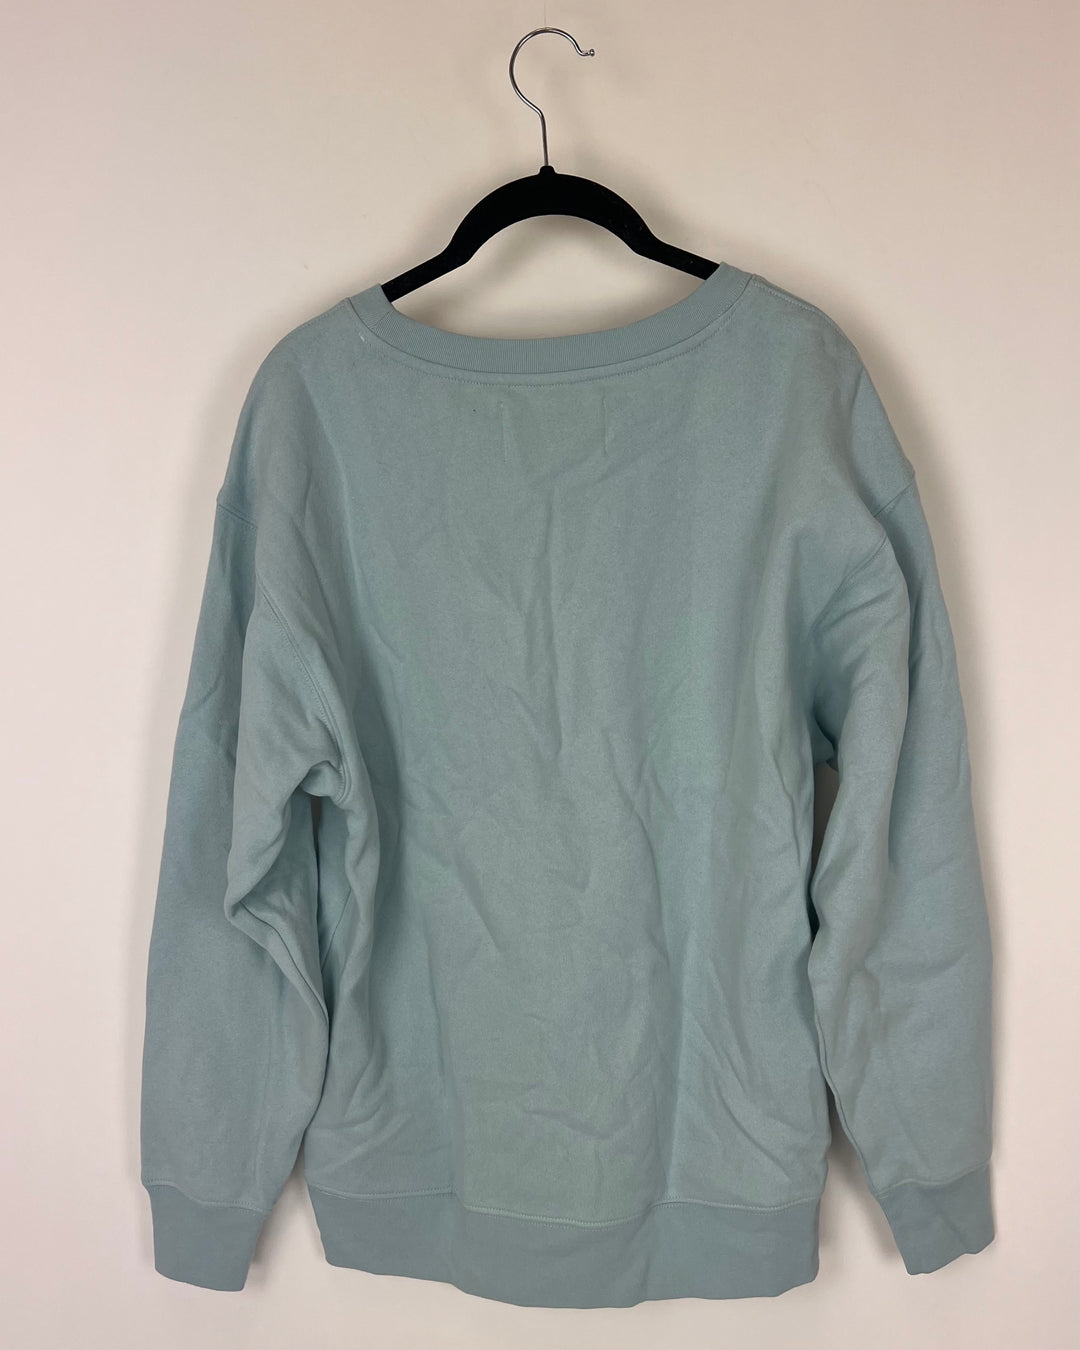 Blue Crew Neck Sweatshirt - Size 4/6